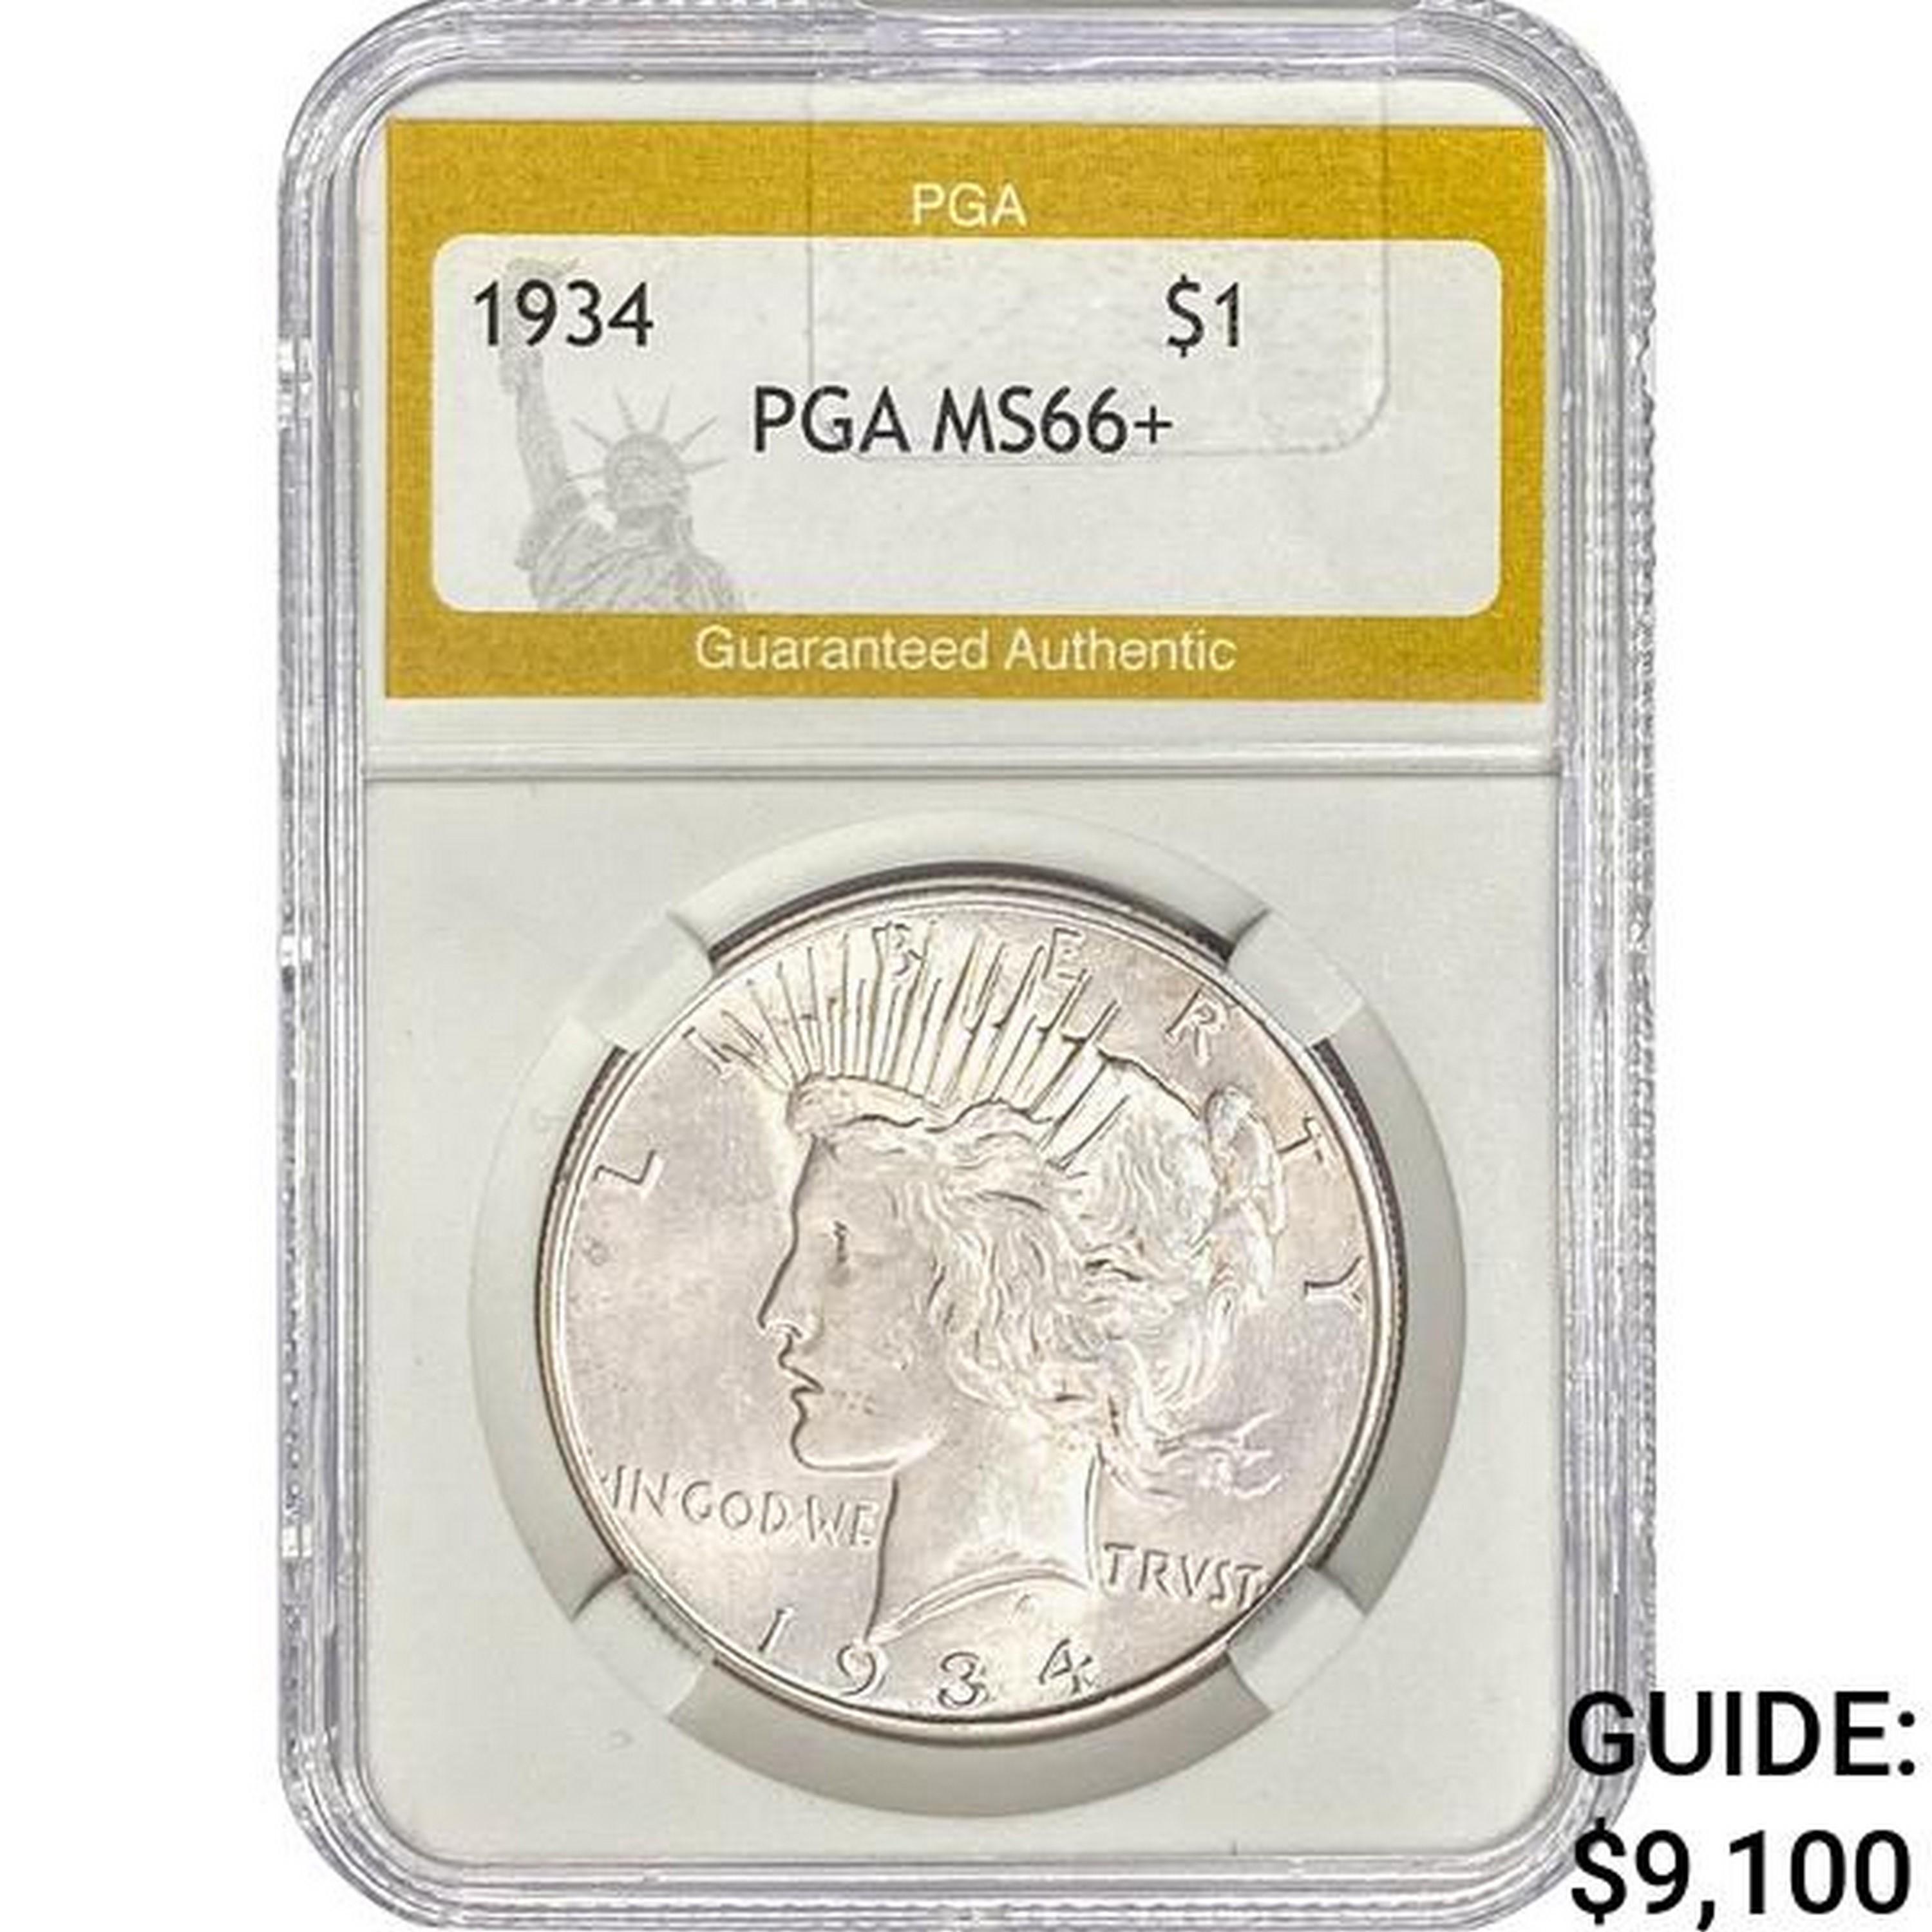 1934 Silver Peace Dollar PGA MS66+